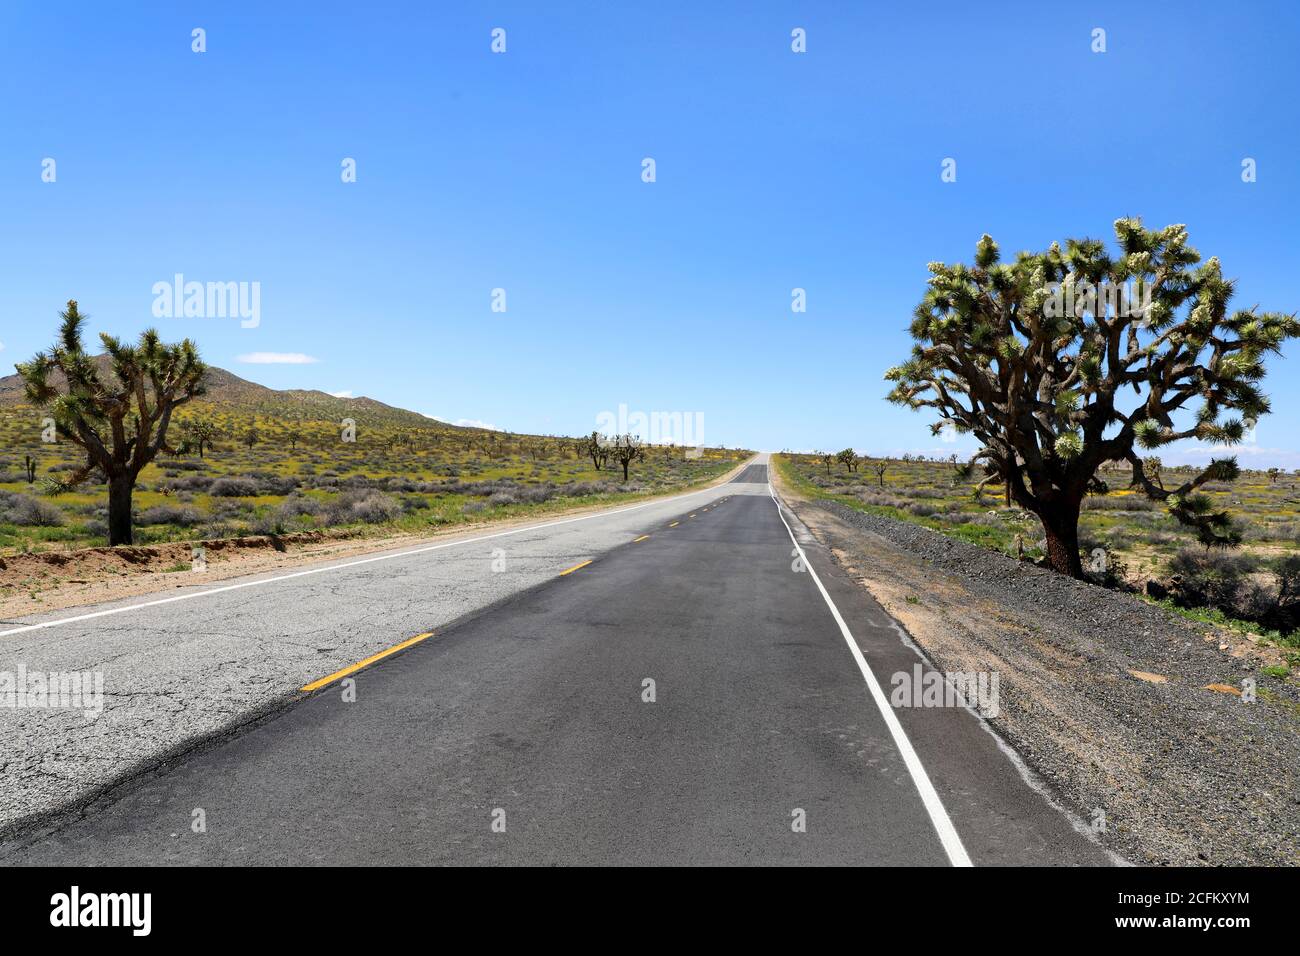 Joshua Tree and Road in California Desert, USA Stockfoto